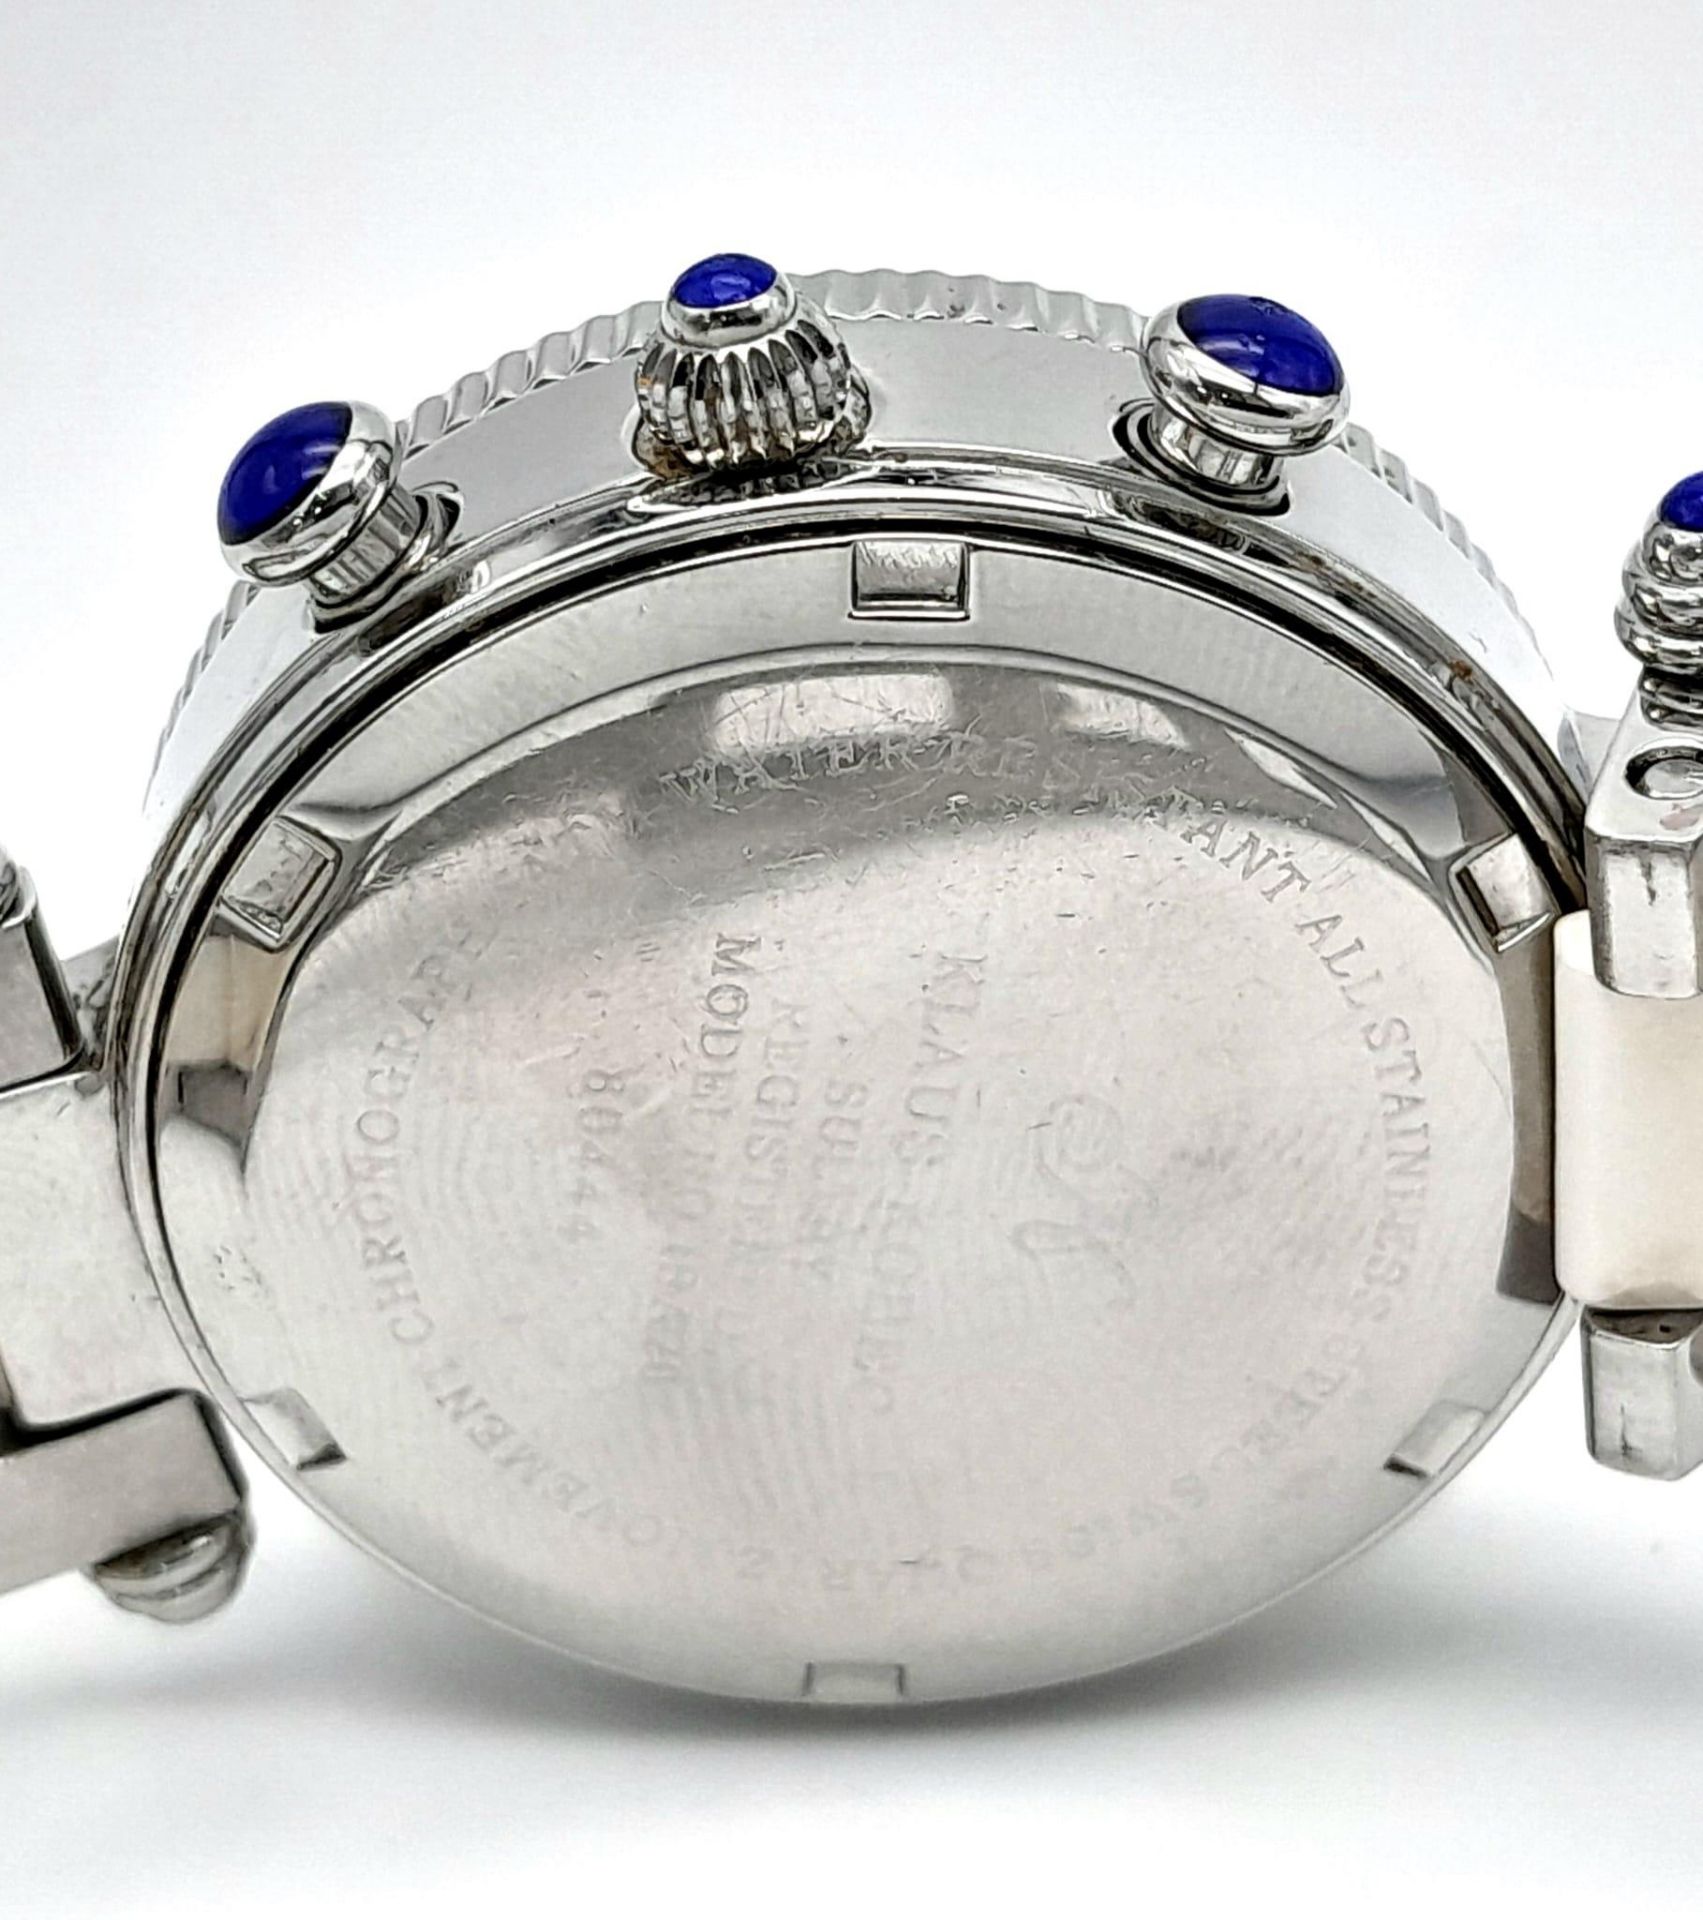 A Klaus Kobec Chronograph Quartz Ladies Watch. Ceramic and stainless steel bracelet and case - 34mm. - Bild 5 aus 6